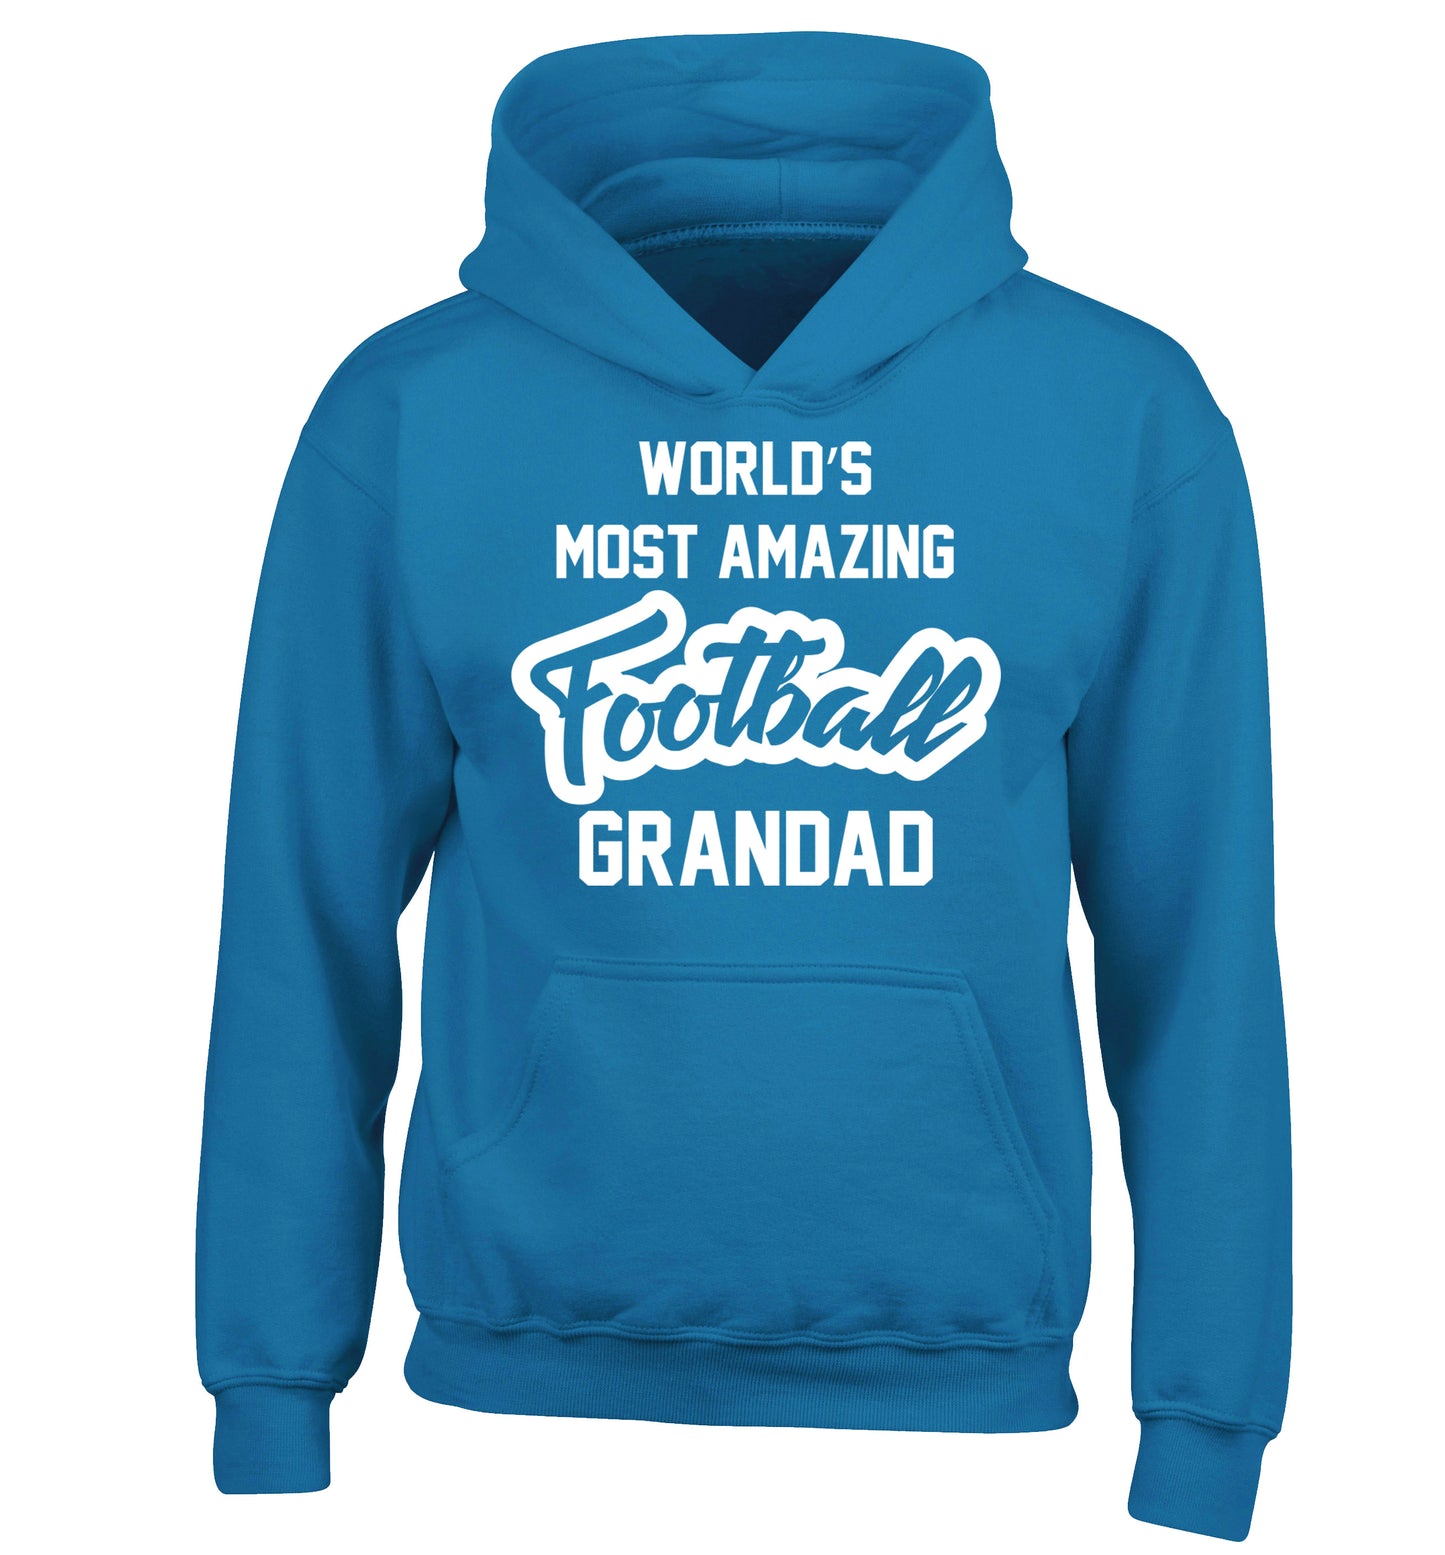 Worlds most amazing football grandad children's blue hoodie 12-14 Years